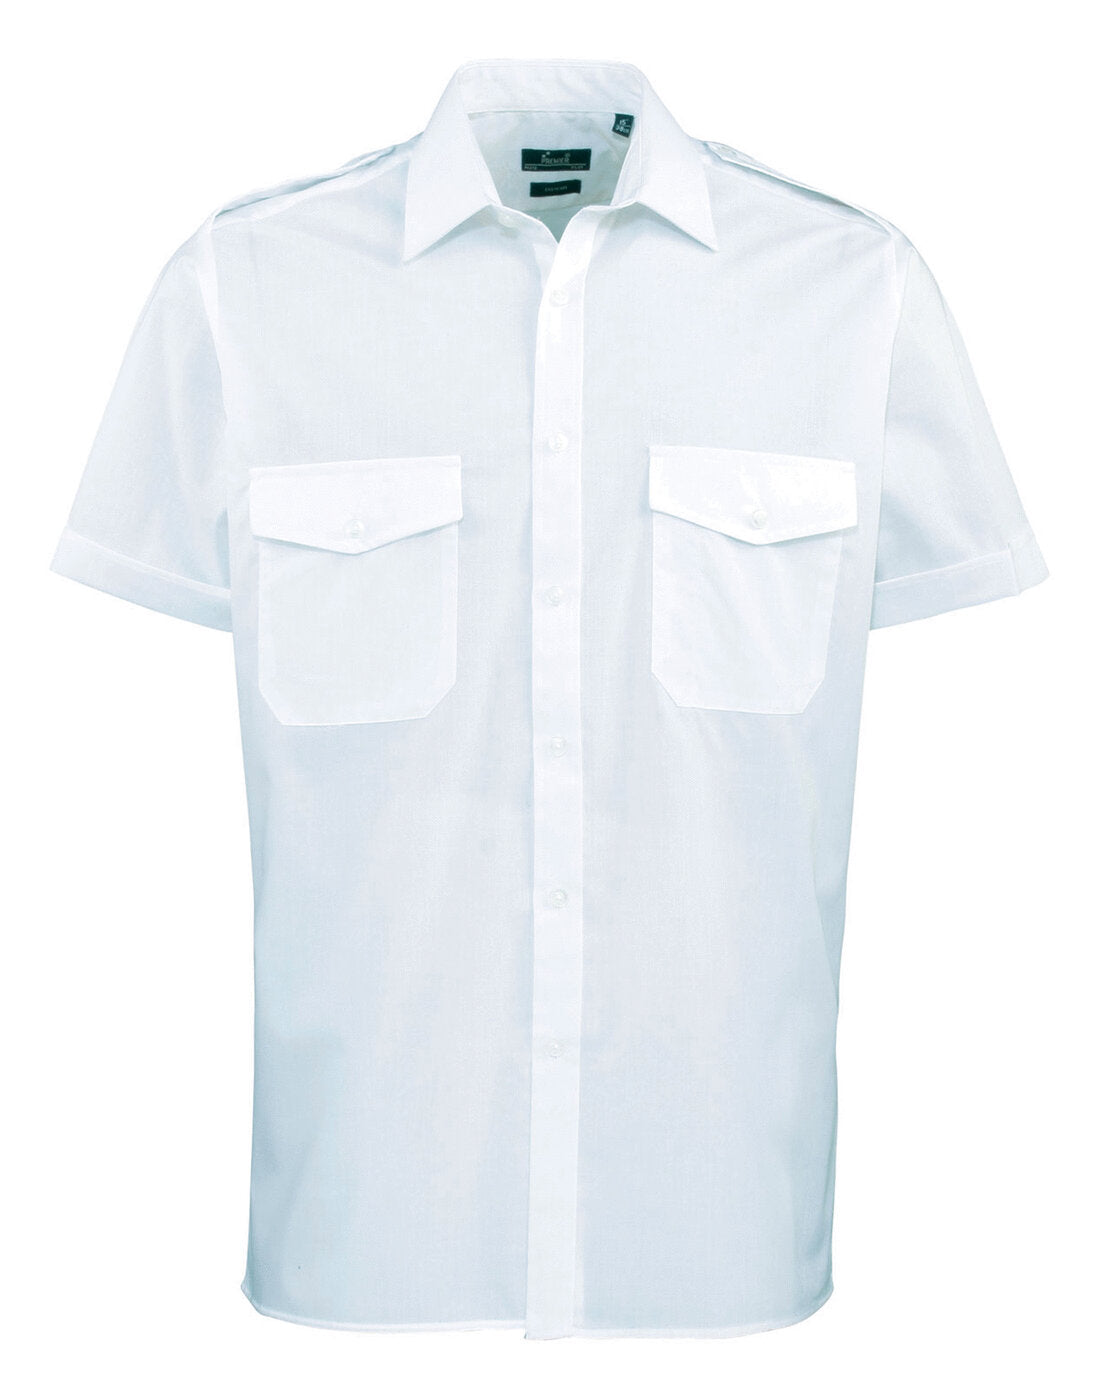 Premier Men's Short Sleeve Security Shirt